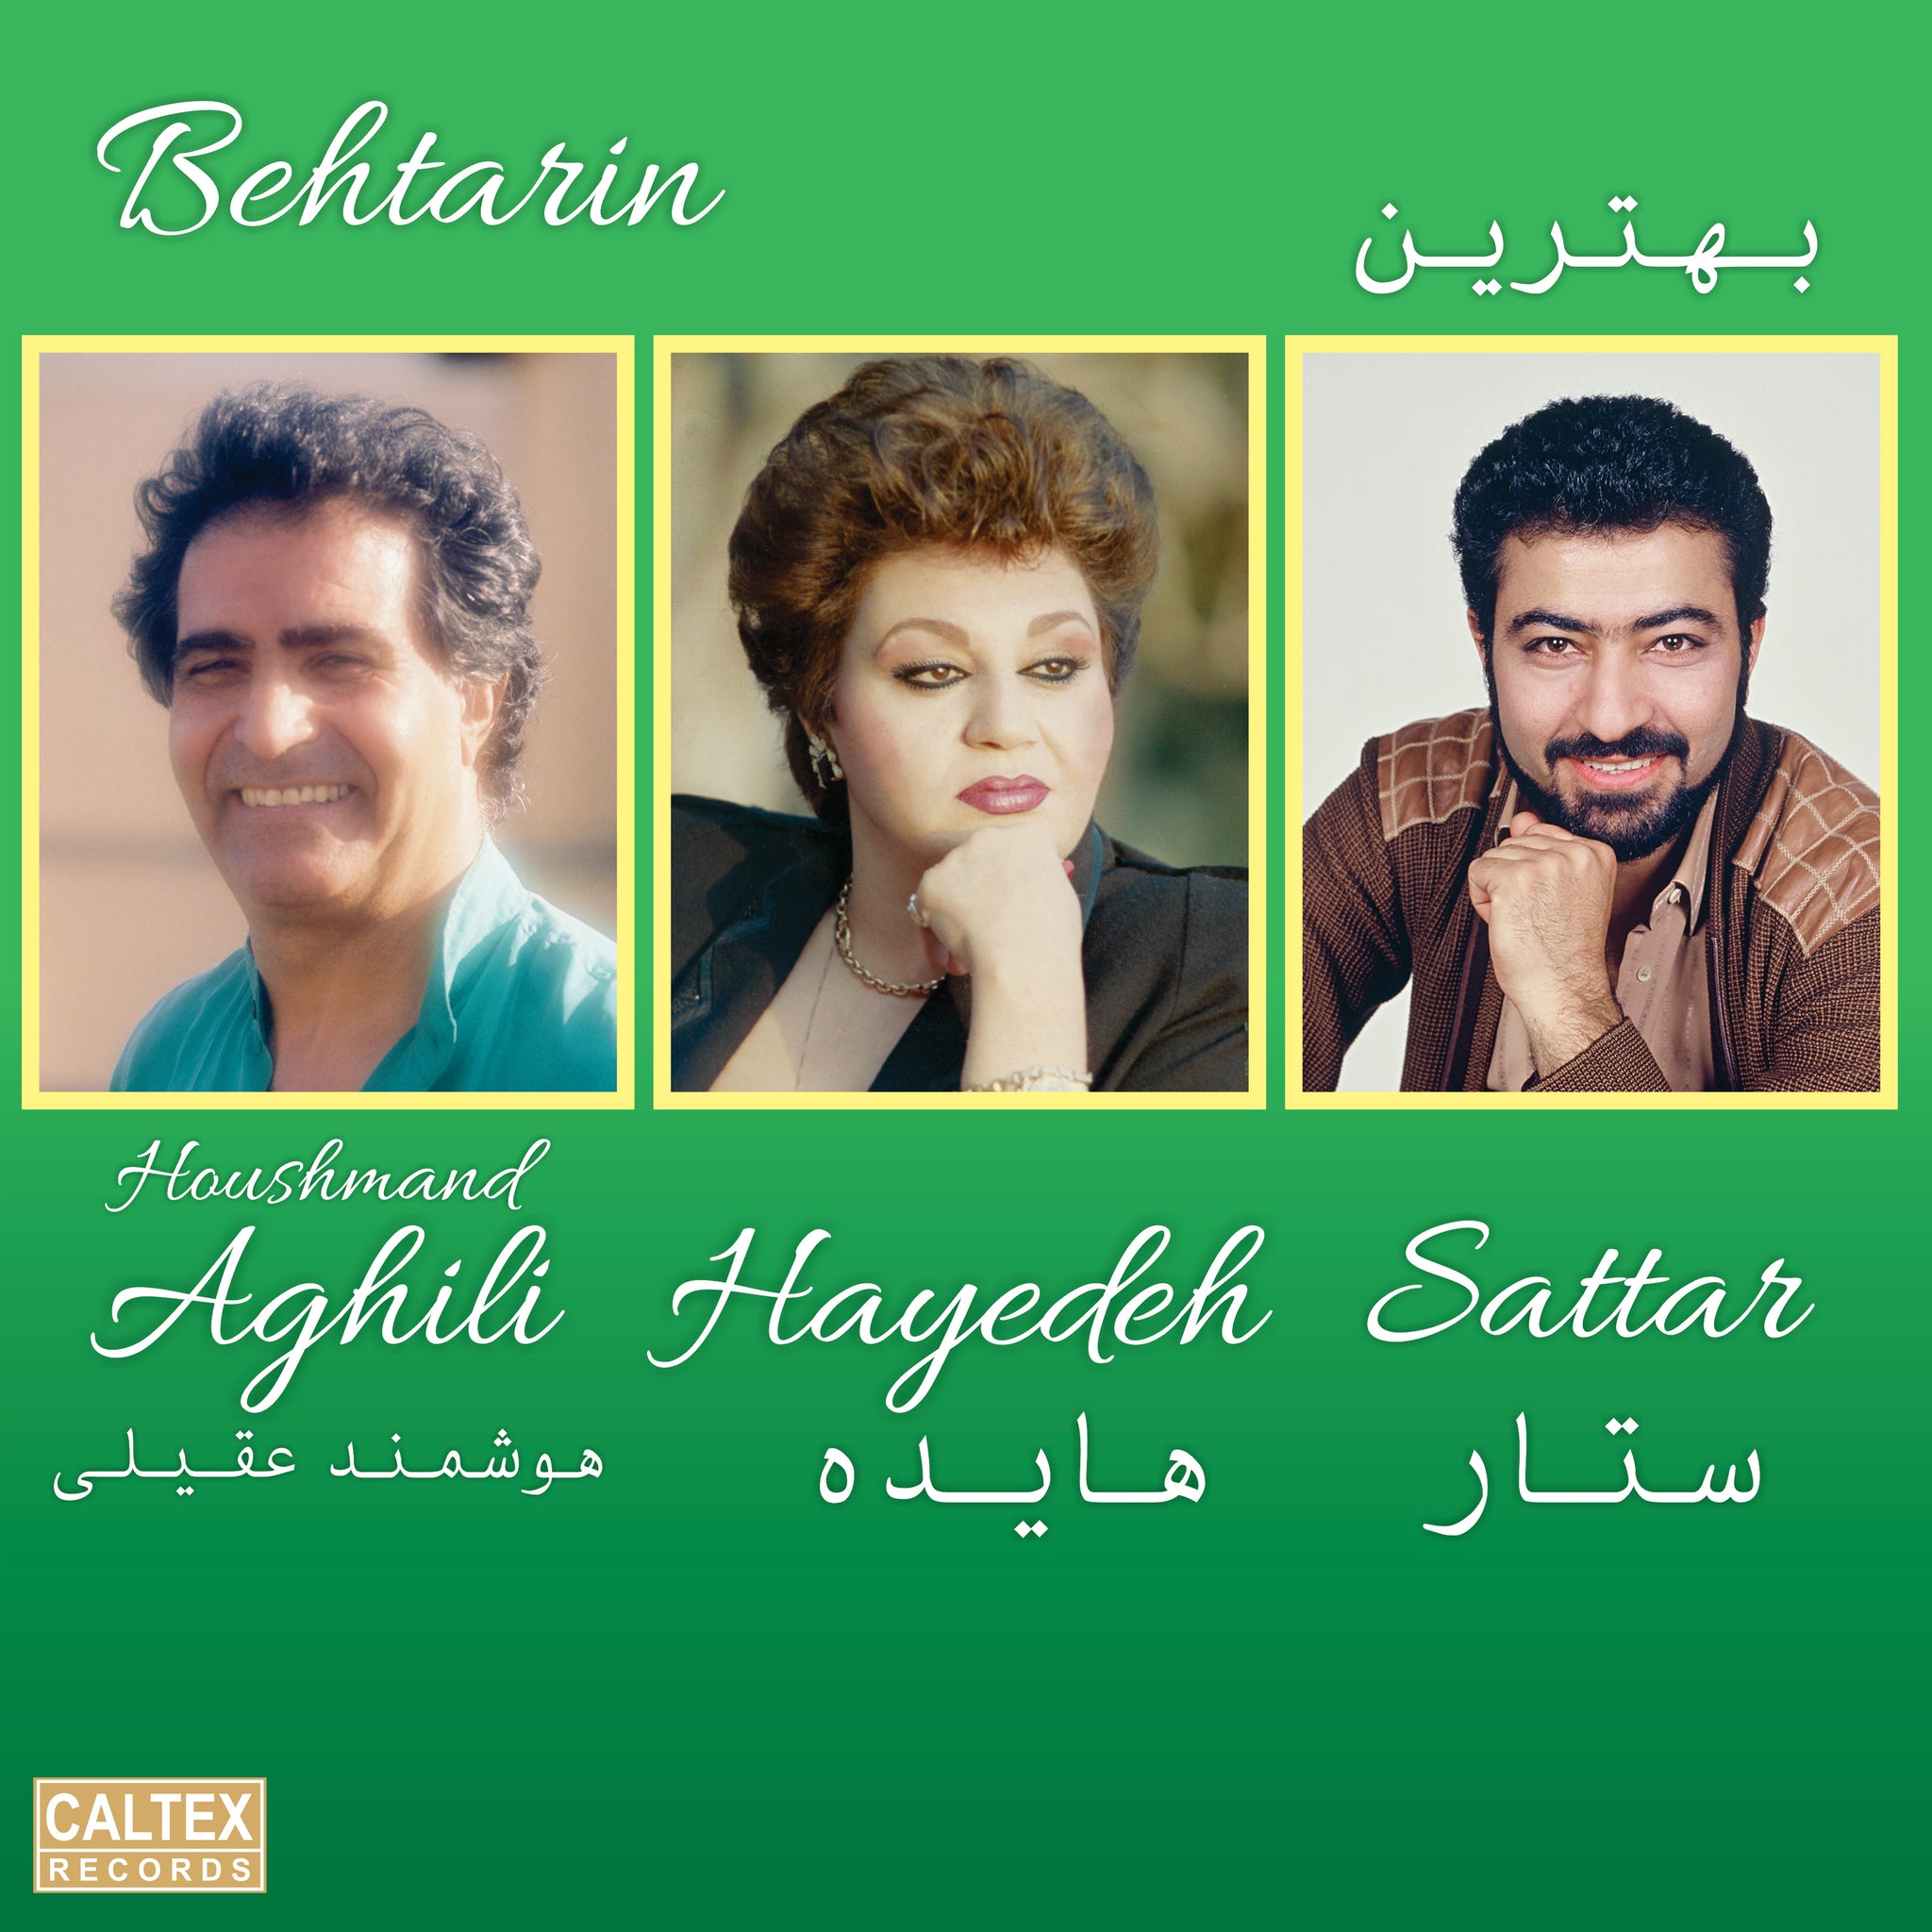 Hayedeh, Sattar, Houshmand Aghili - Behtarin (Vinyl)